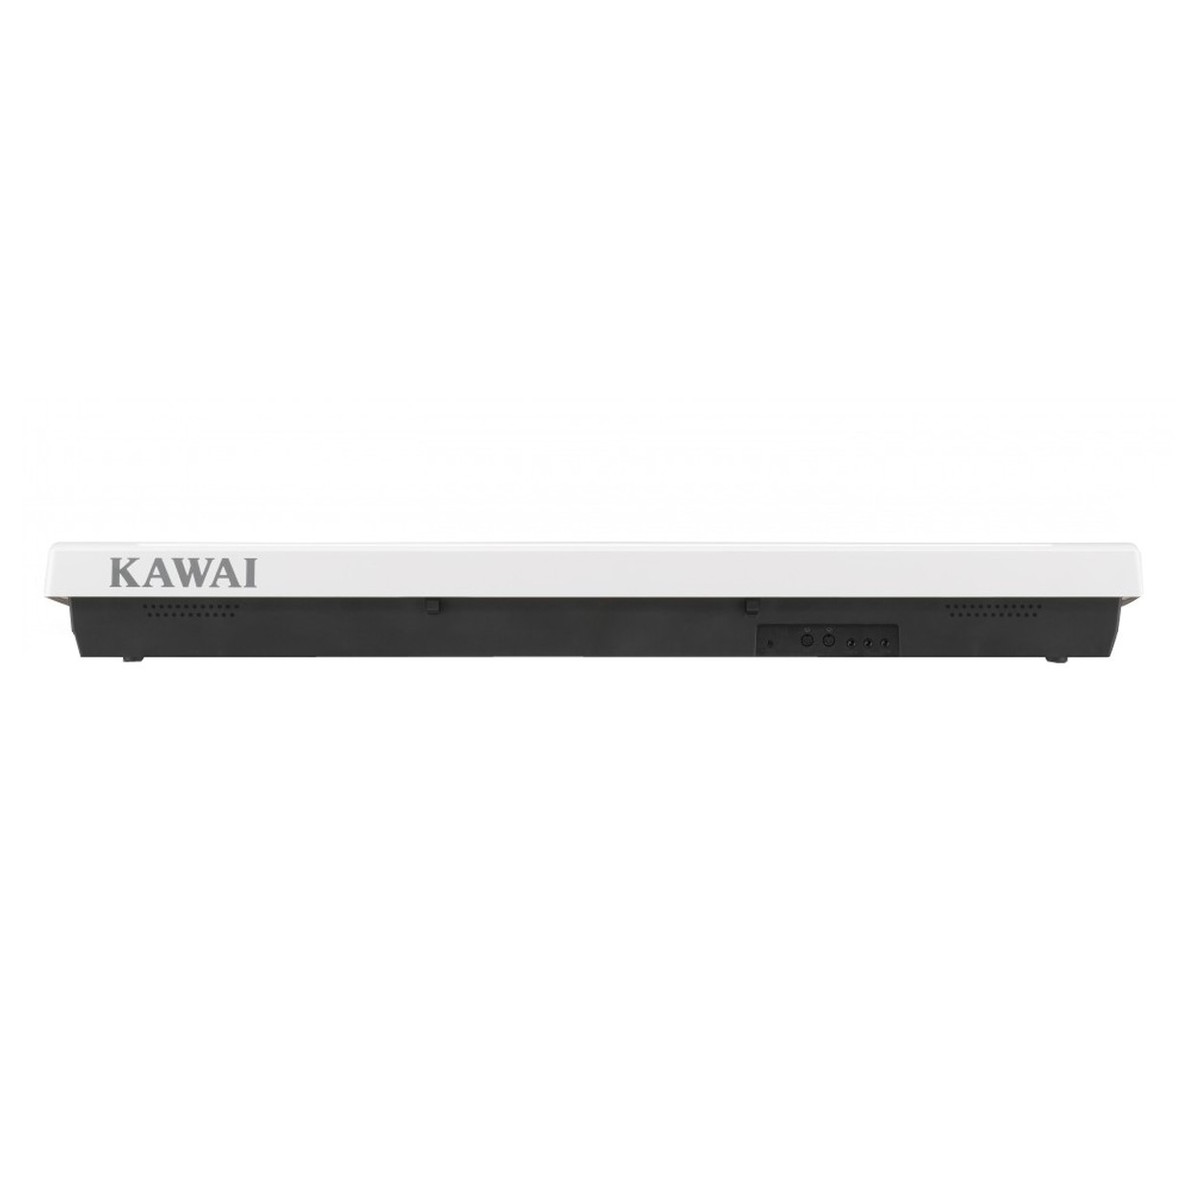 Kawai Es110 - Blanc - Portable digital piano - Variation 2